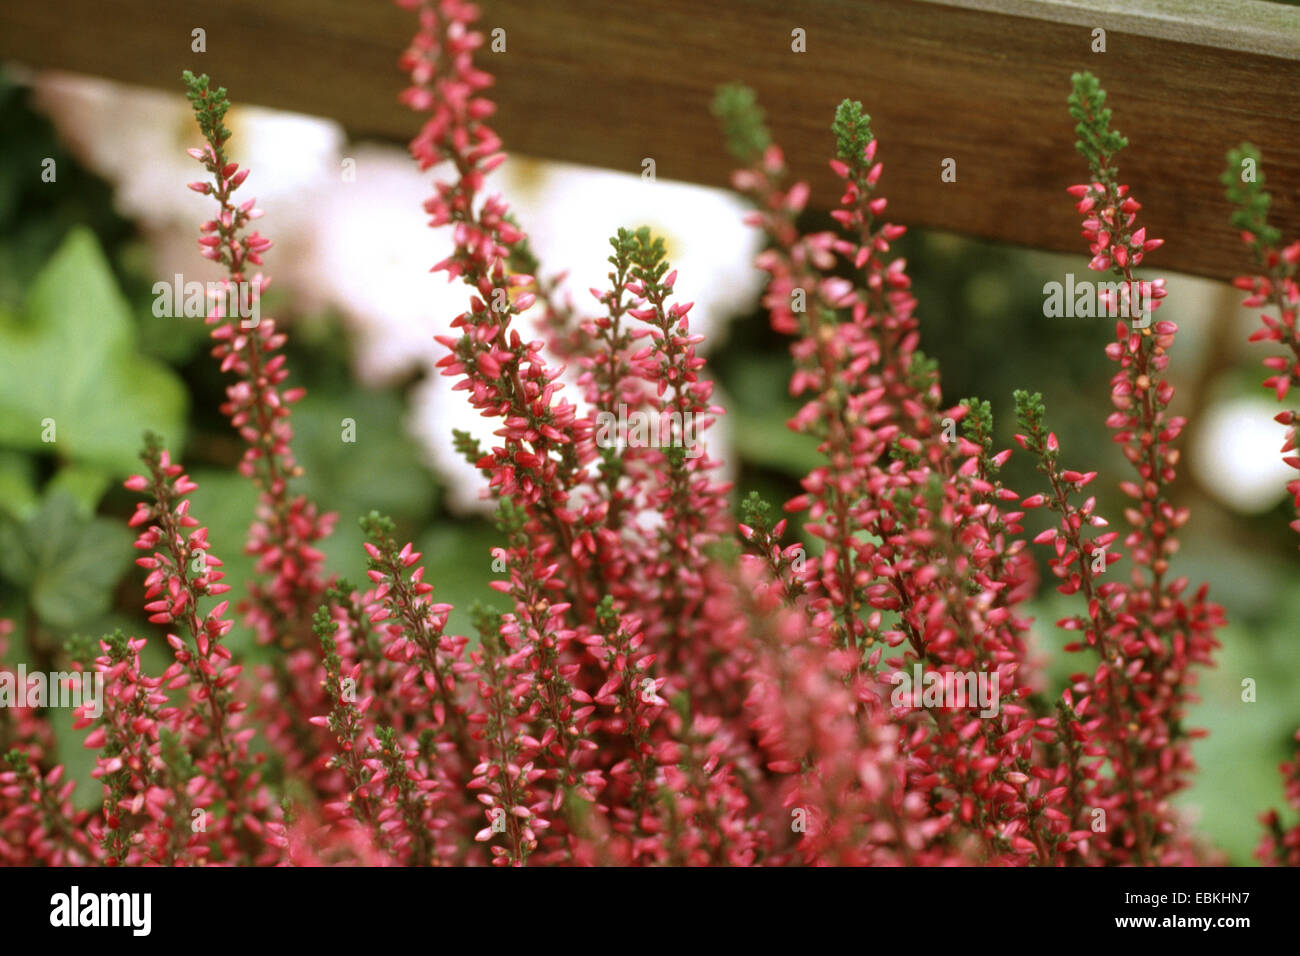 heather, ling (Calluna vulgaris), cultivar Stock Photo